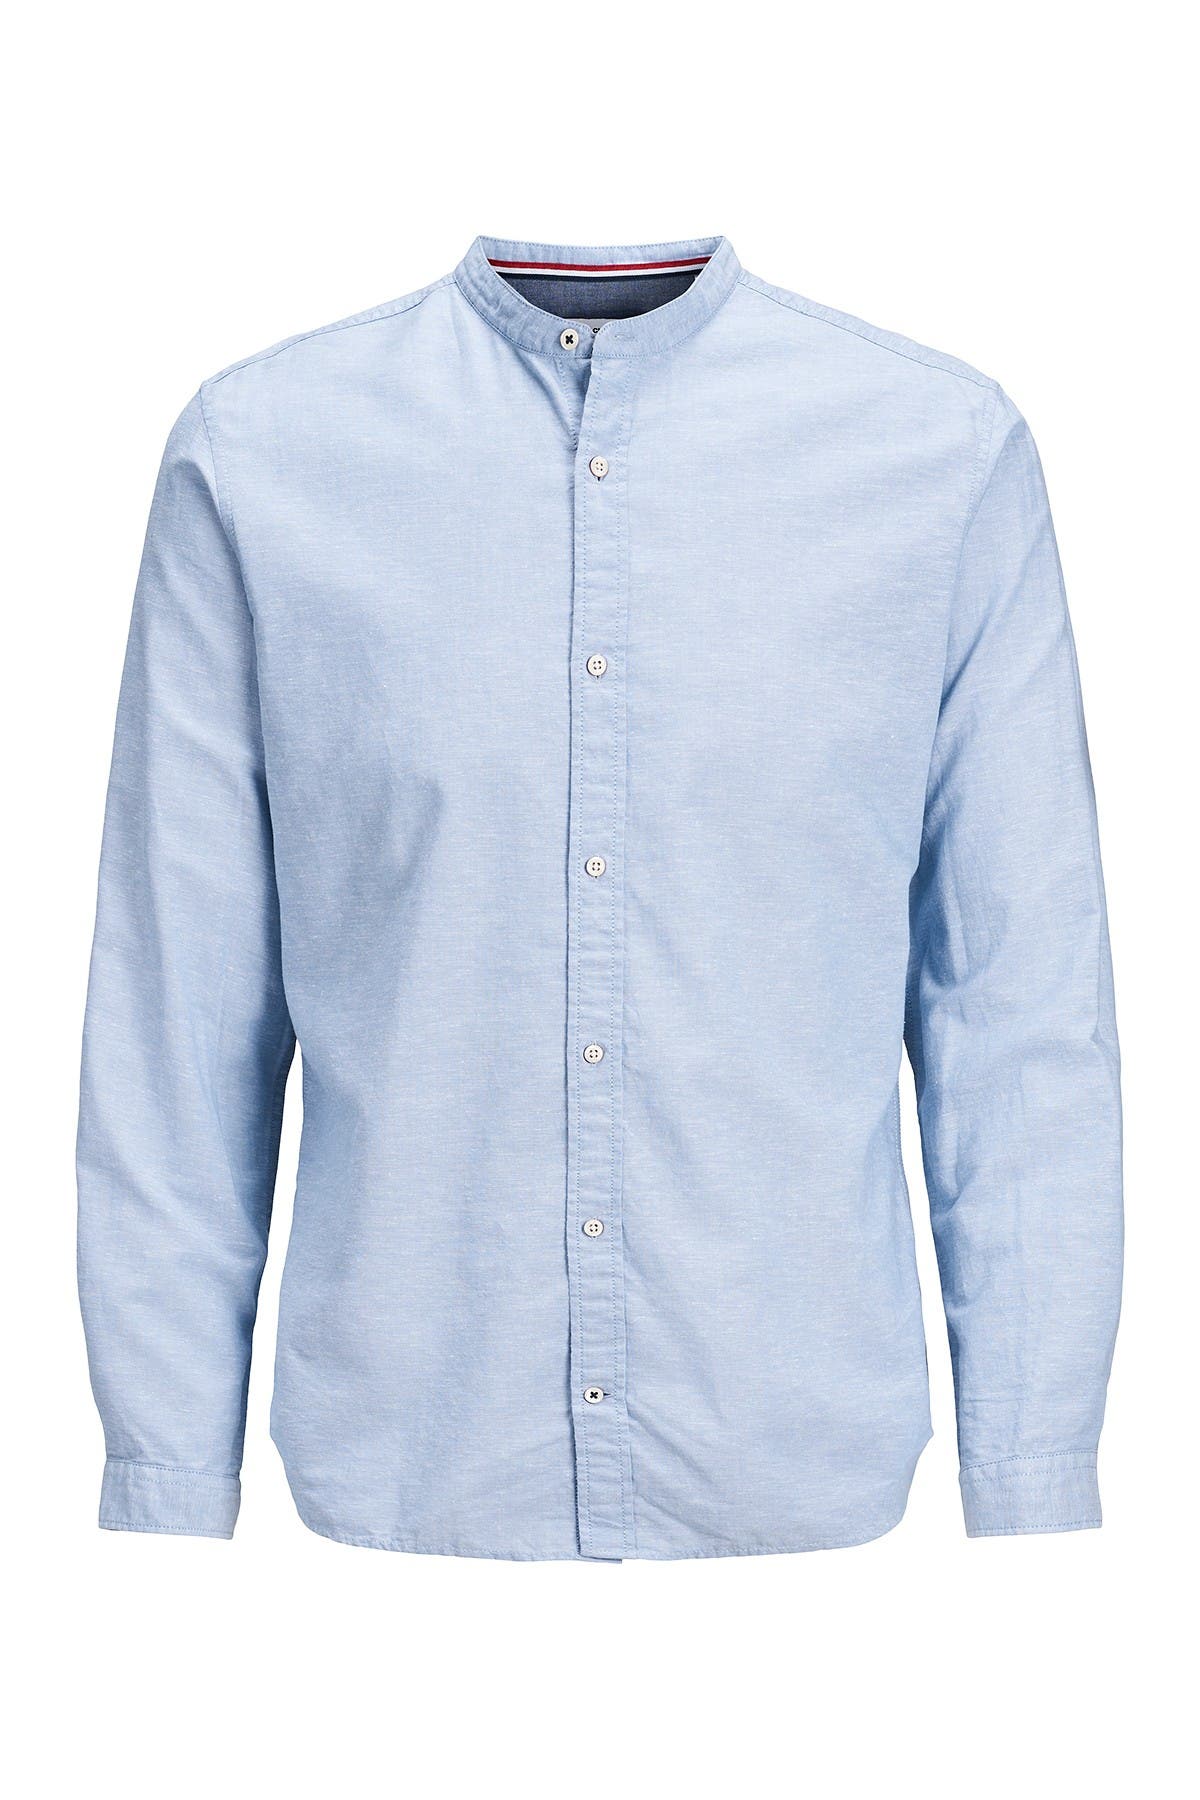 Jack & Jones Solid Band Collar Summer Slim Fit Shirt In Light/pastel Blue4